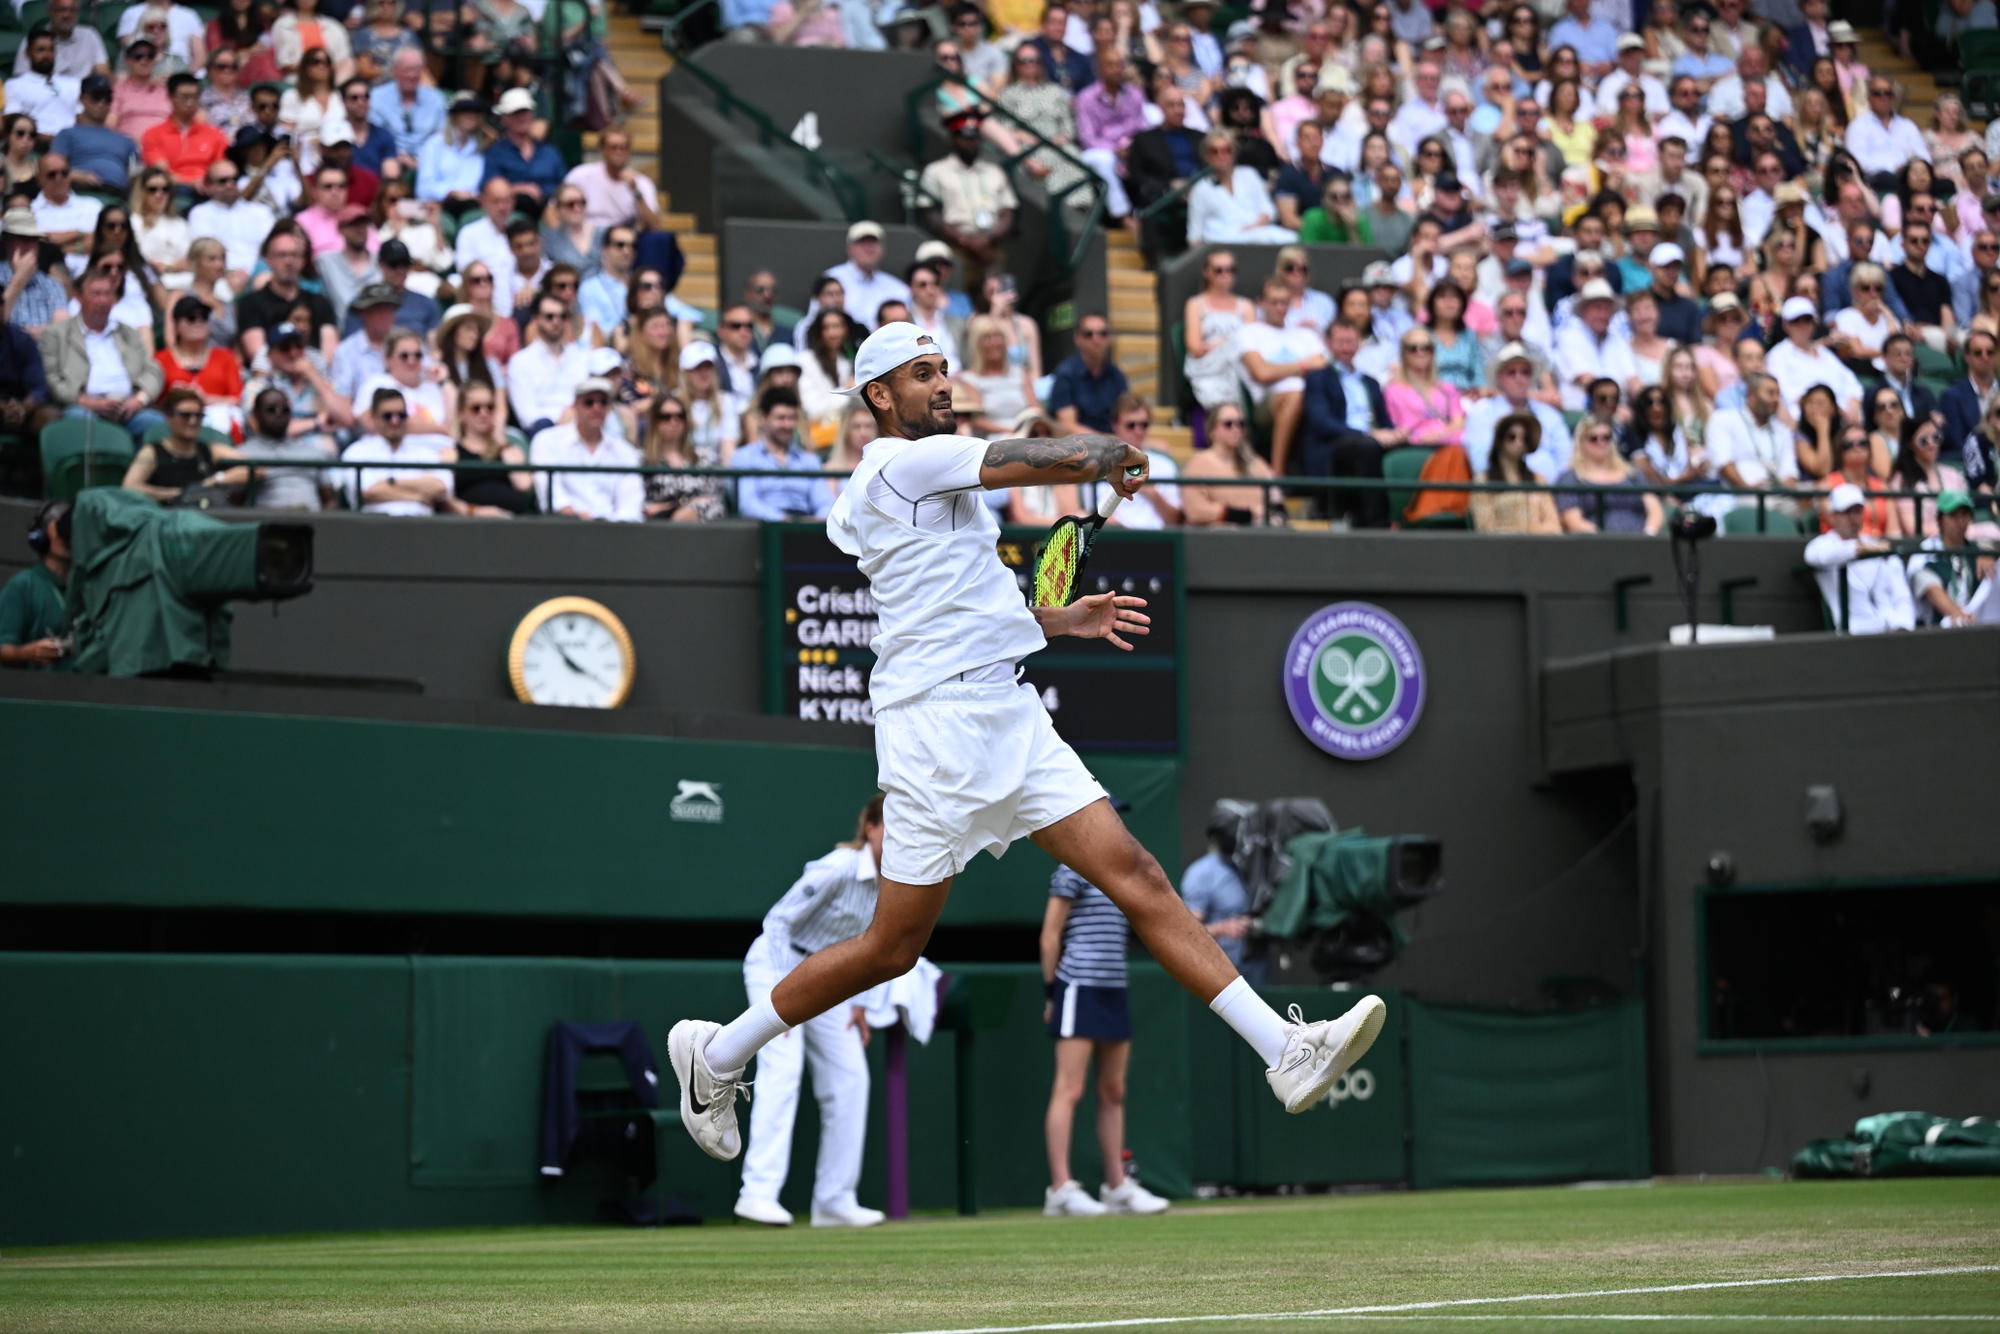 Wimbledon 2022 final: Novak Djokovic distressed by Nick Kyrgios serve, says former team member